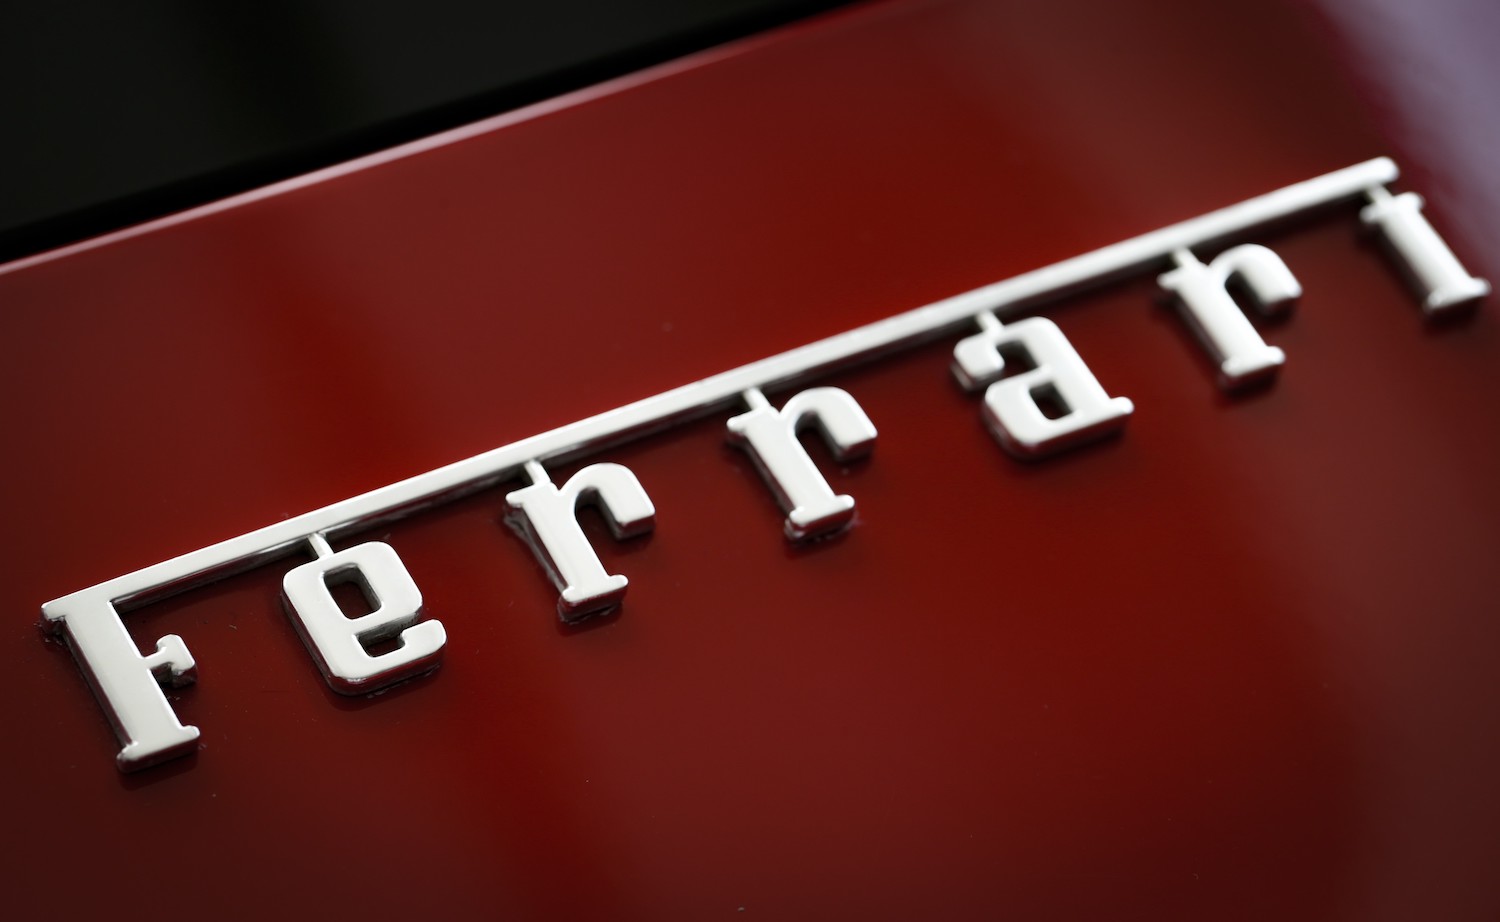 The Ferrari logo on a red vehicle.